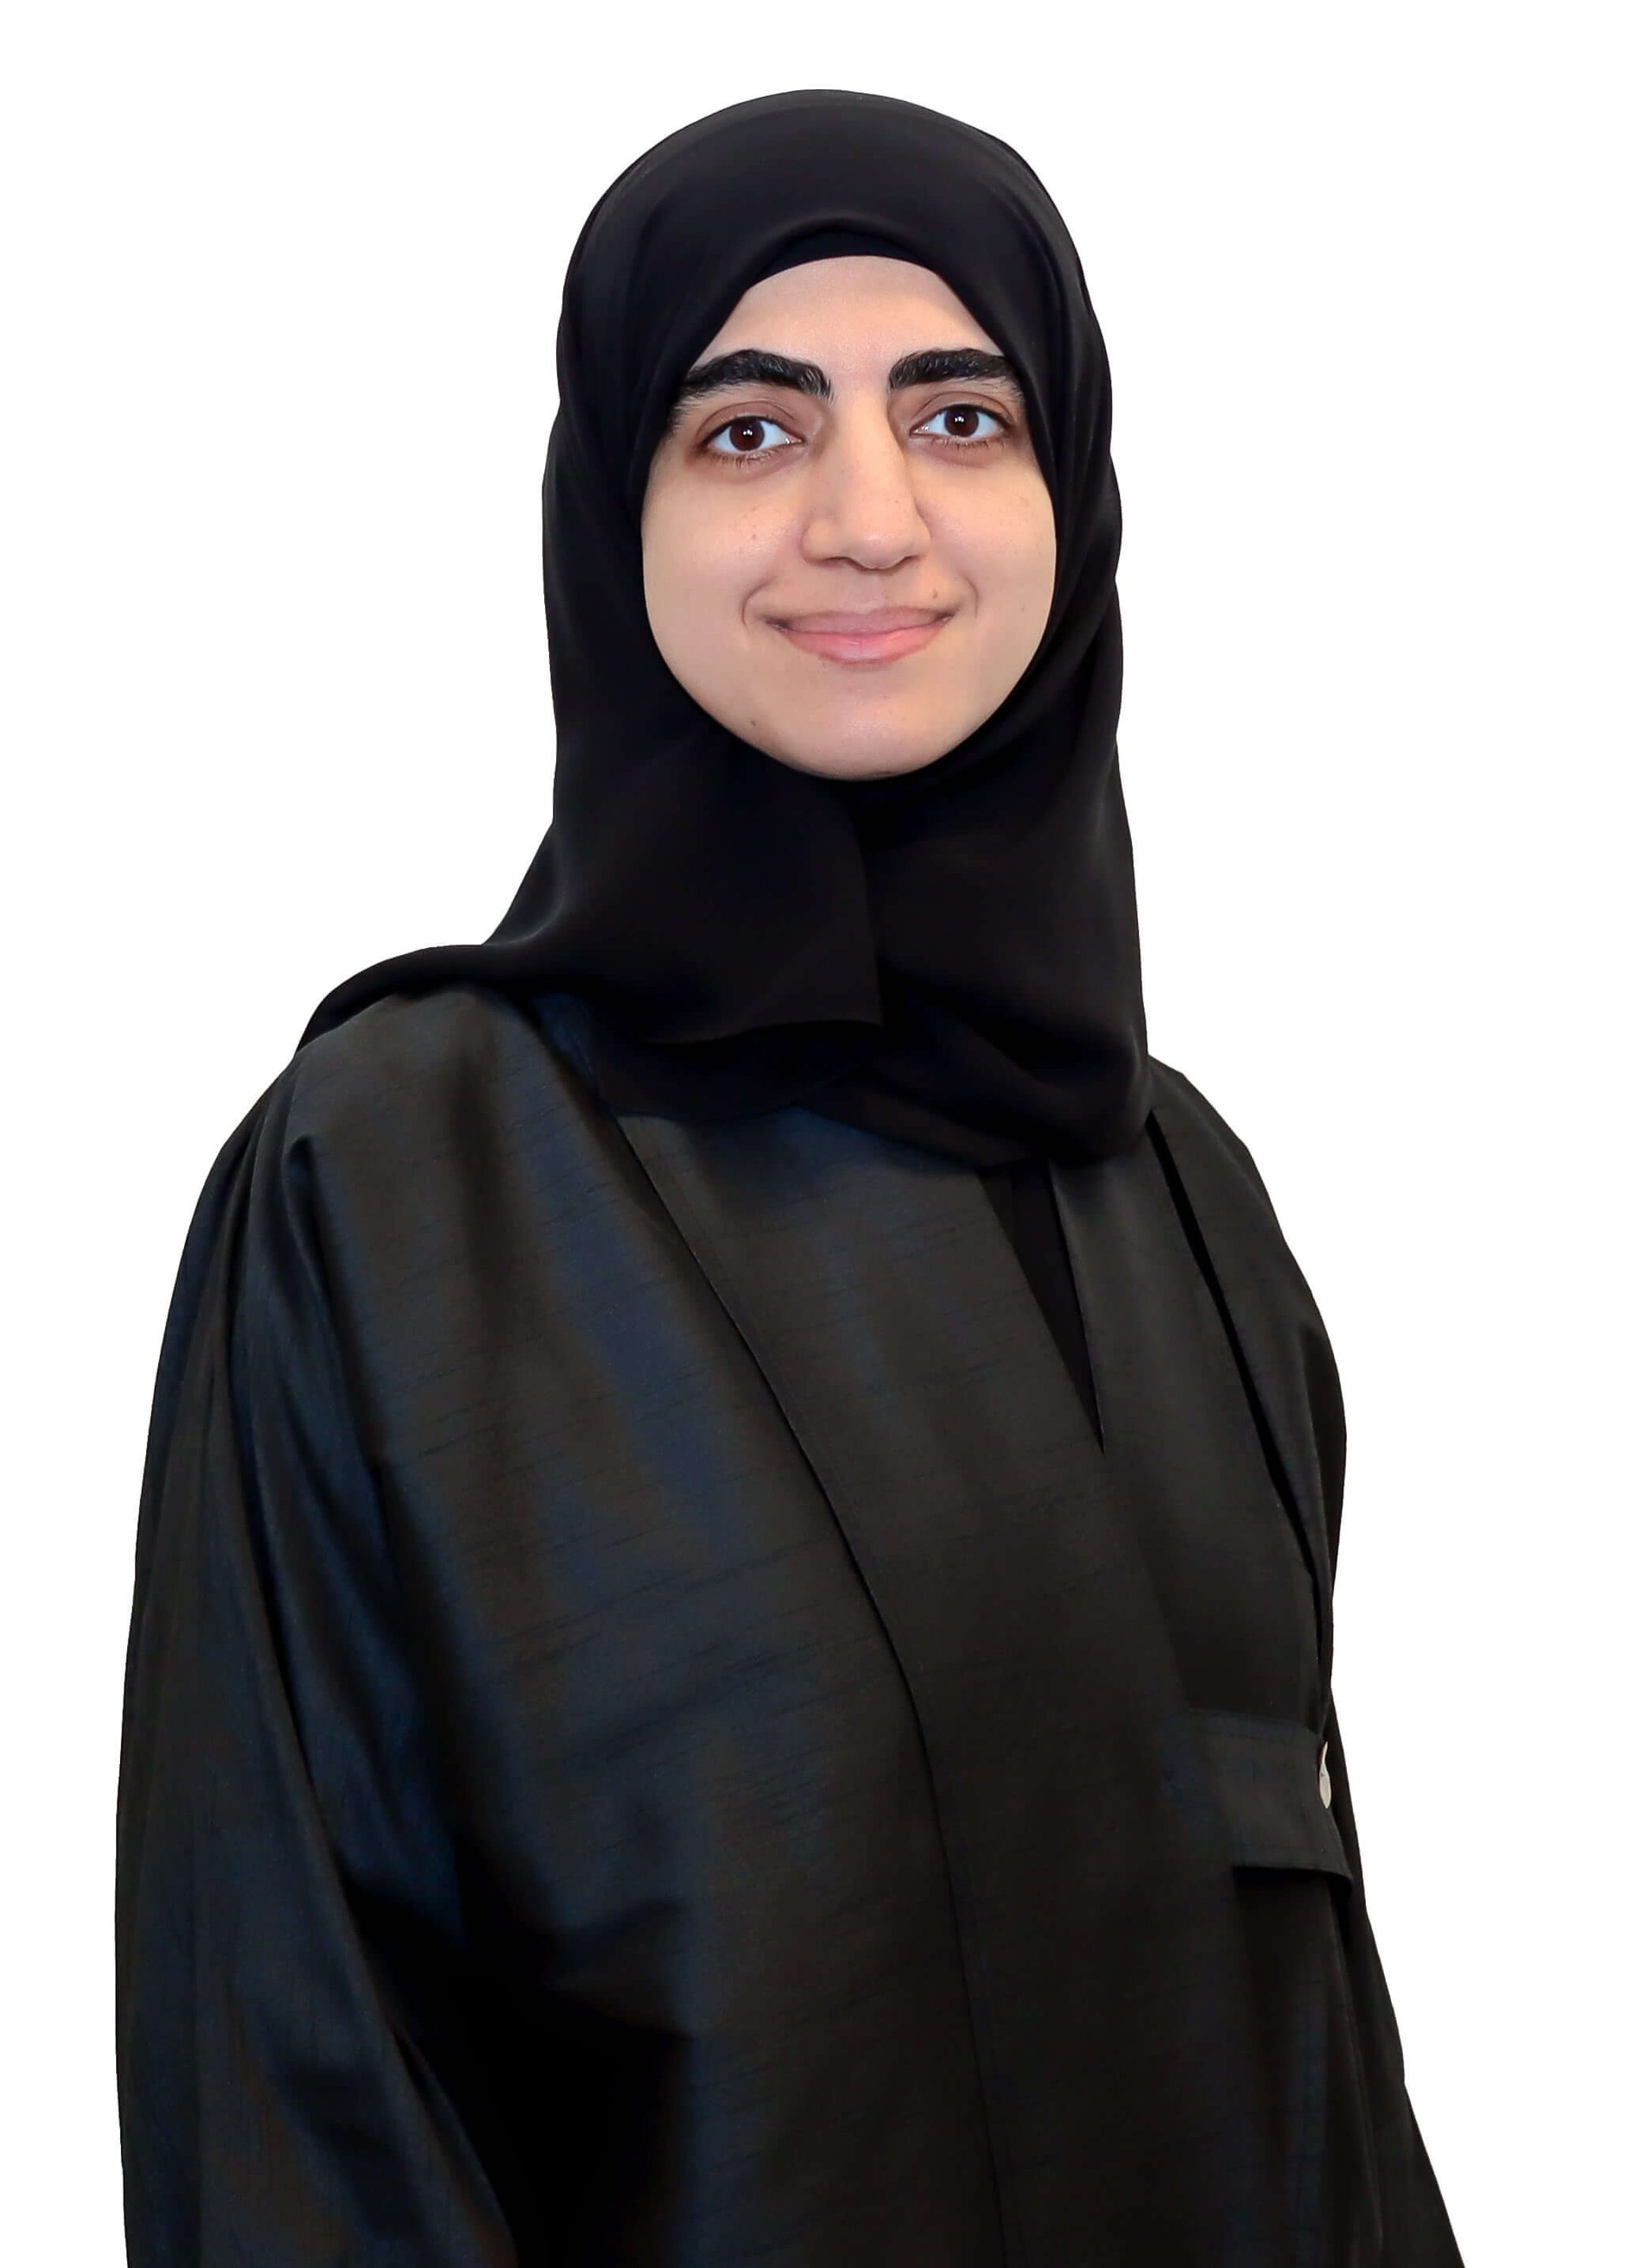 Dr. Noura AlZarooni